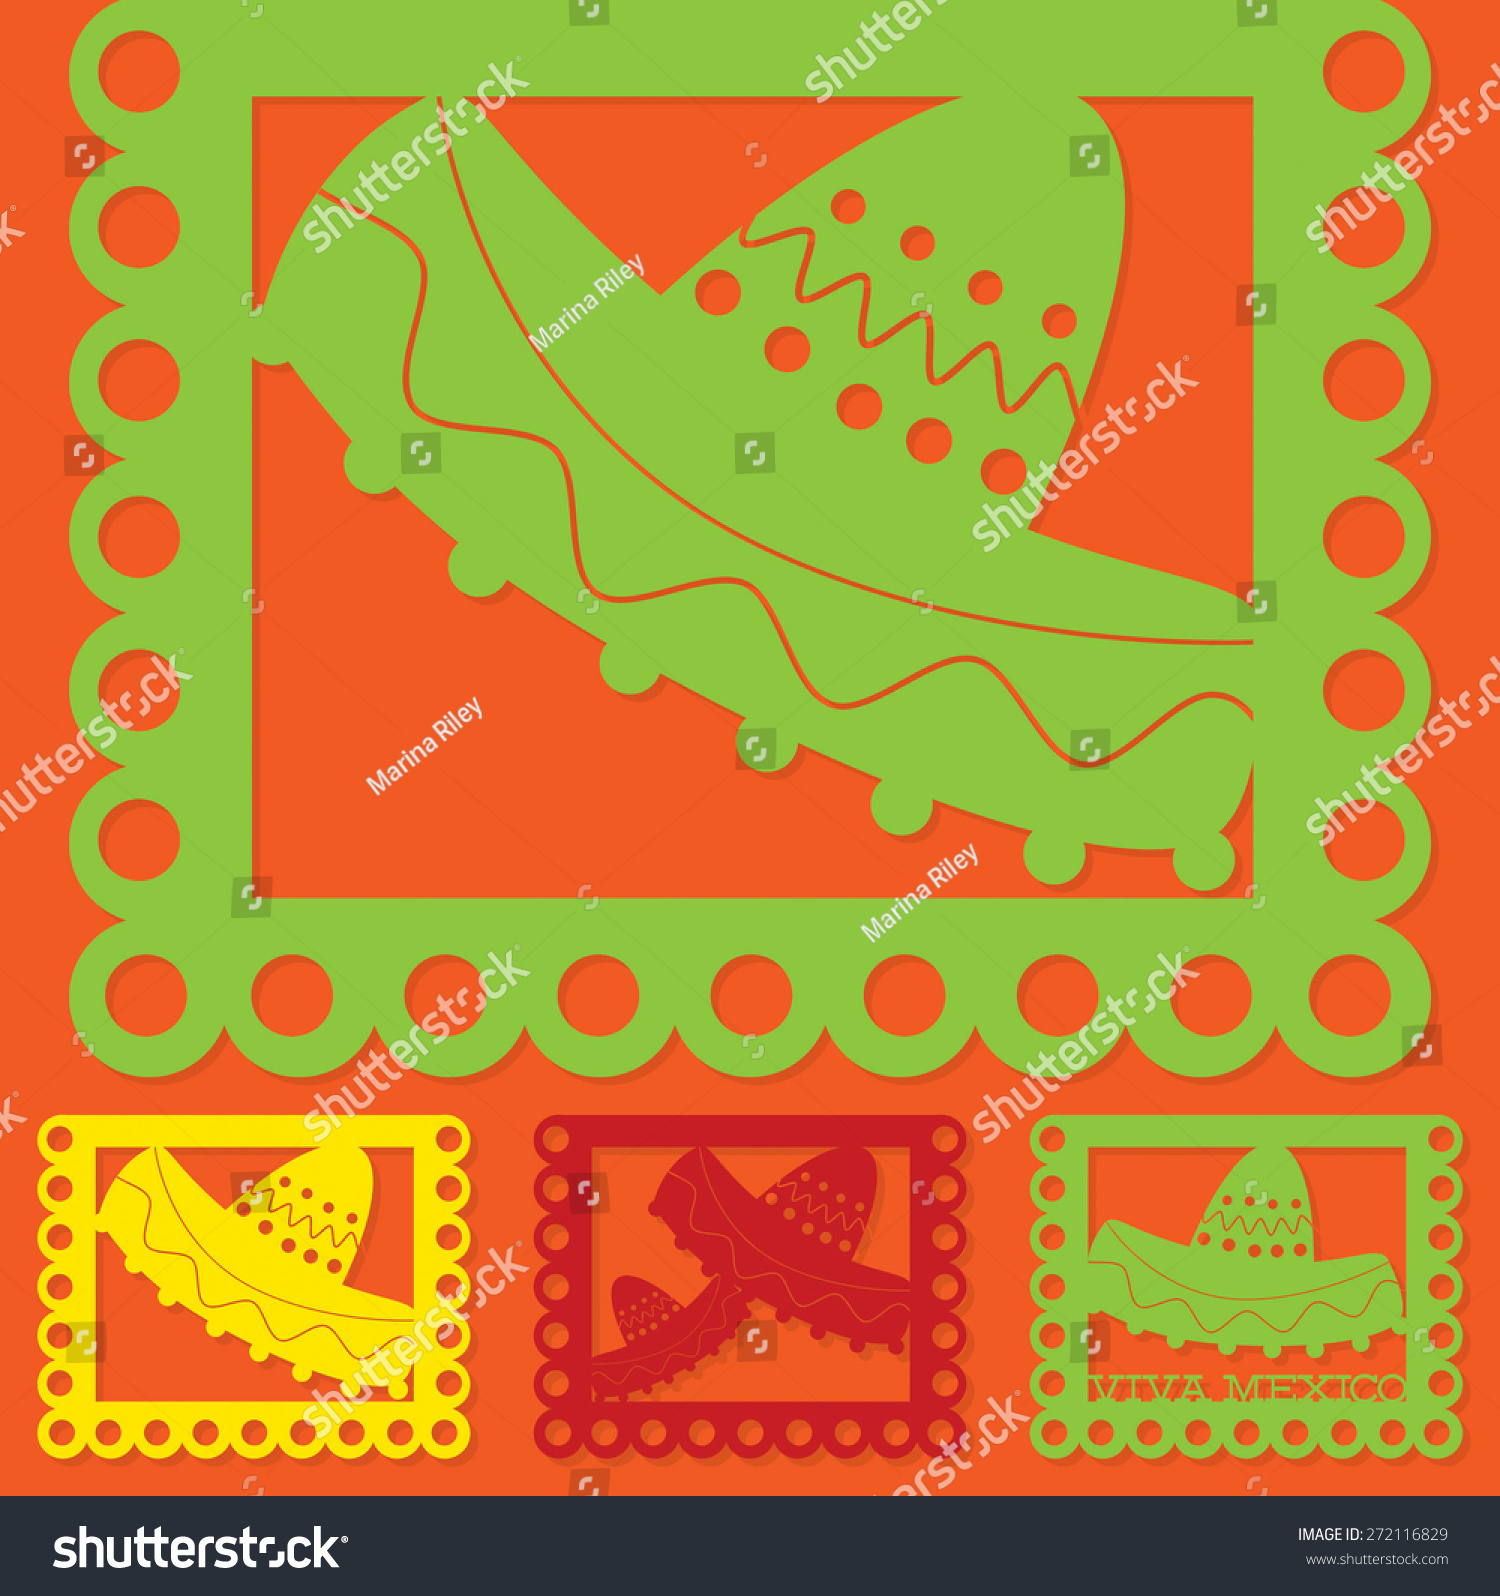 Mexican Papel Picado Paper Flag Decoration เวกเตอร์สต็อก ปลอดค่าลิขสิทธิ์ 272116829 1494